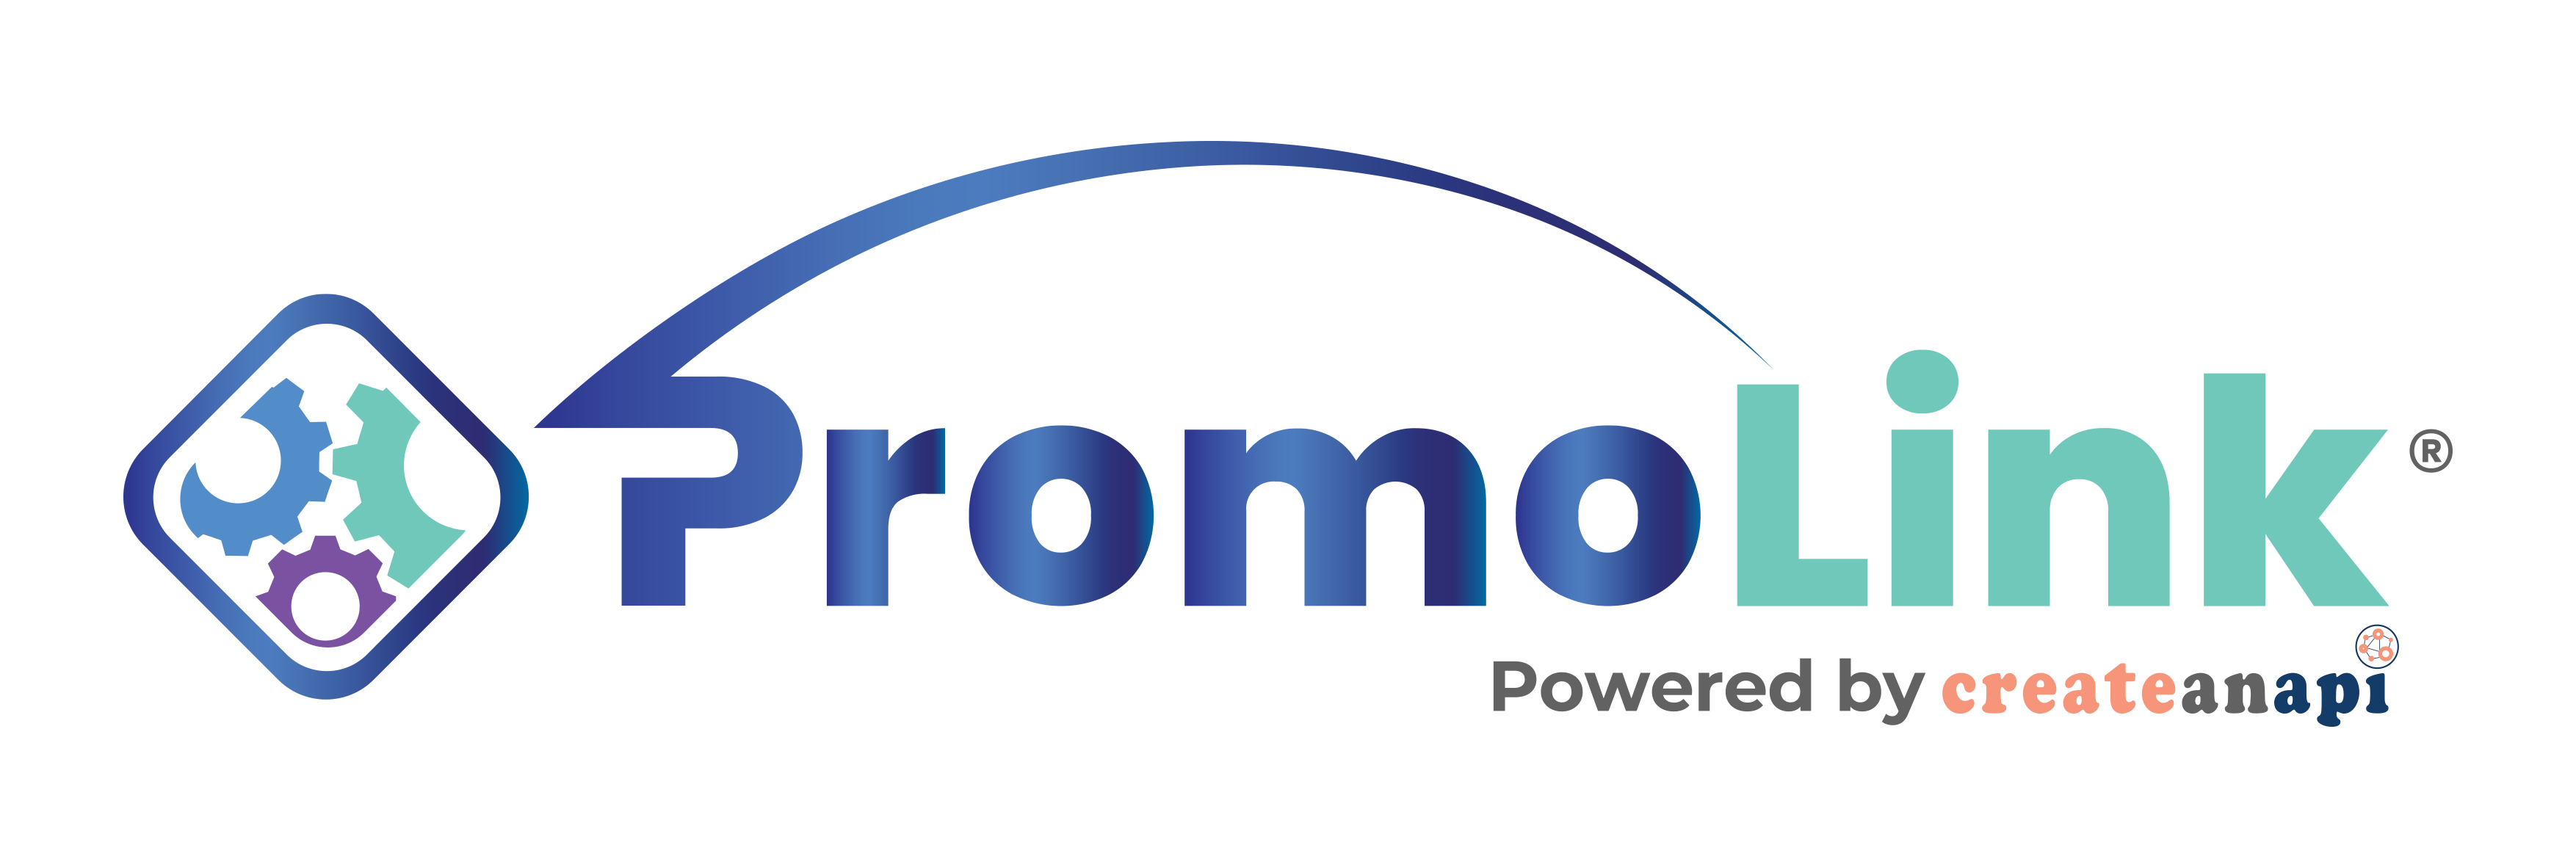 PromoLink logo